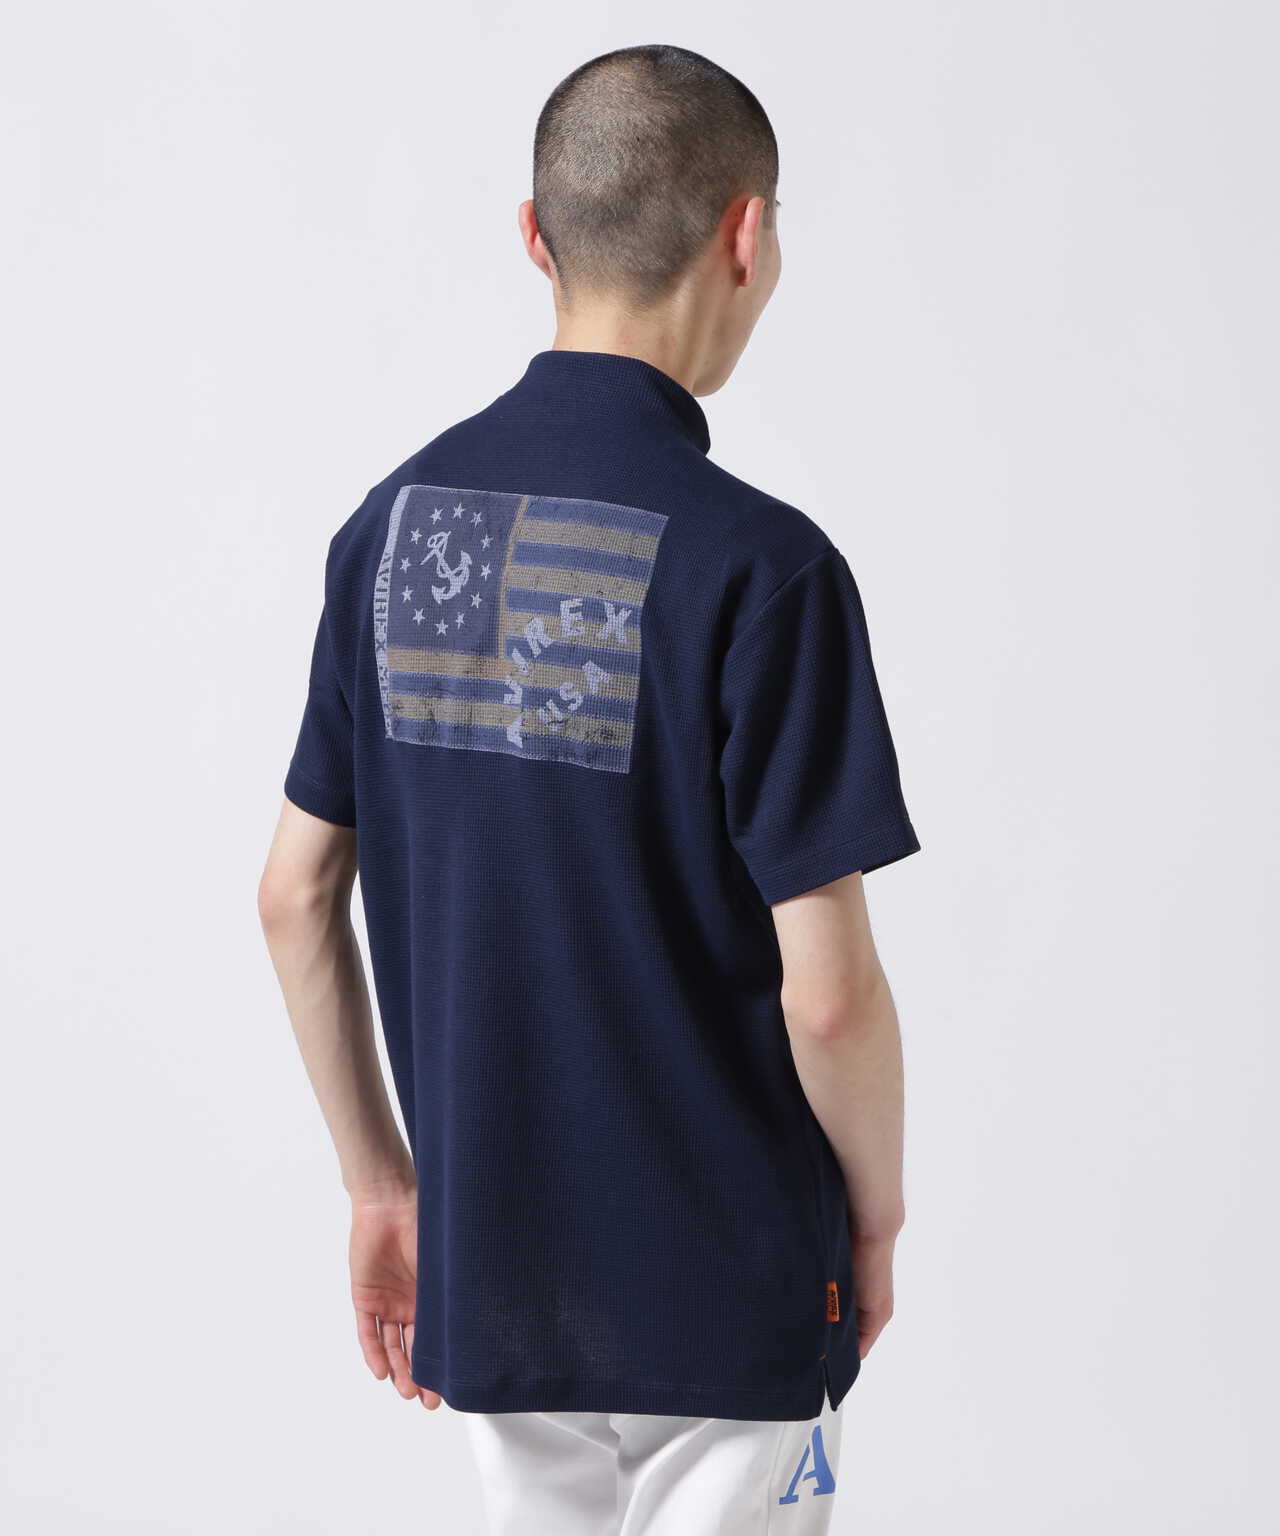 GOLF WEAR》ワッフル モック Tシャツ / WAFFLE MOCK NECK T-SHIRT